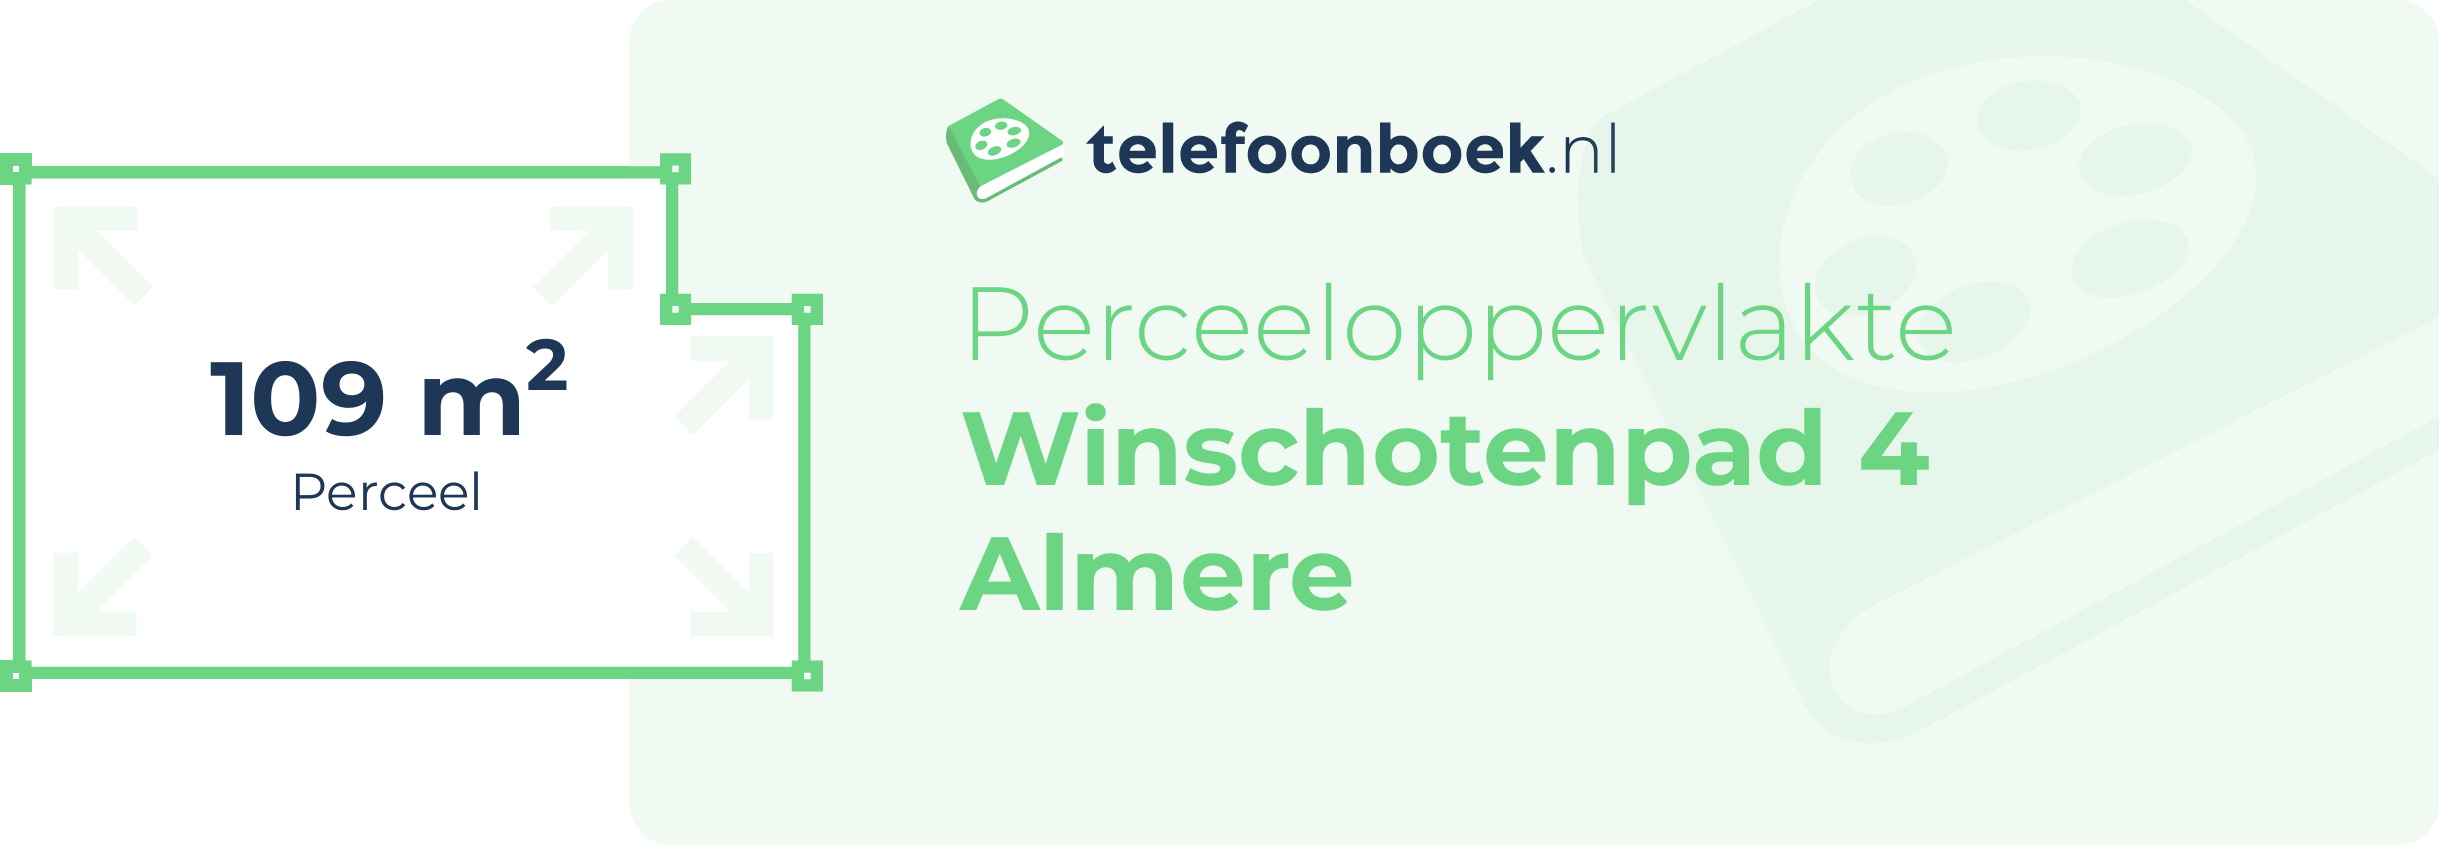 Perceeloppervlakte Winschotenpad 4 Almere